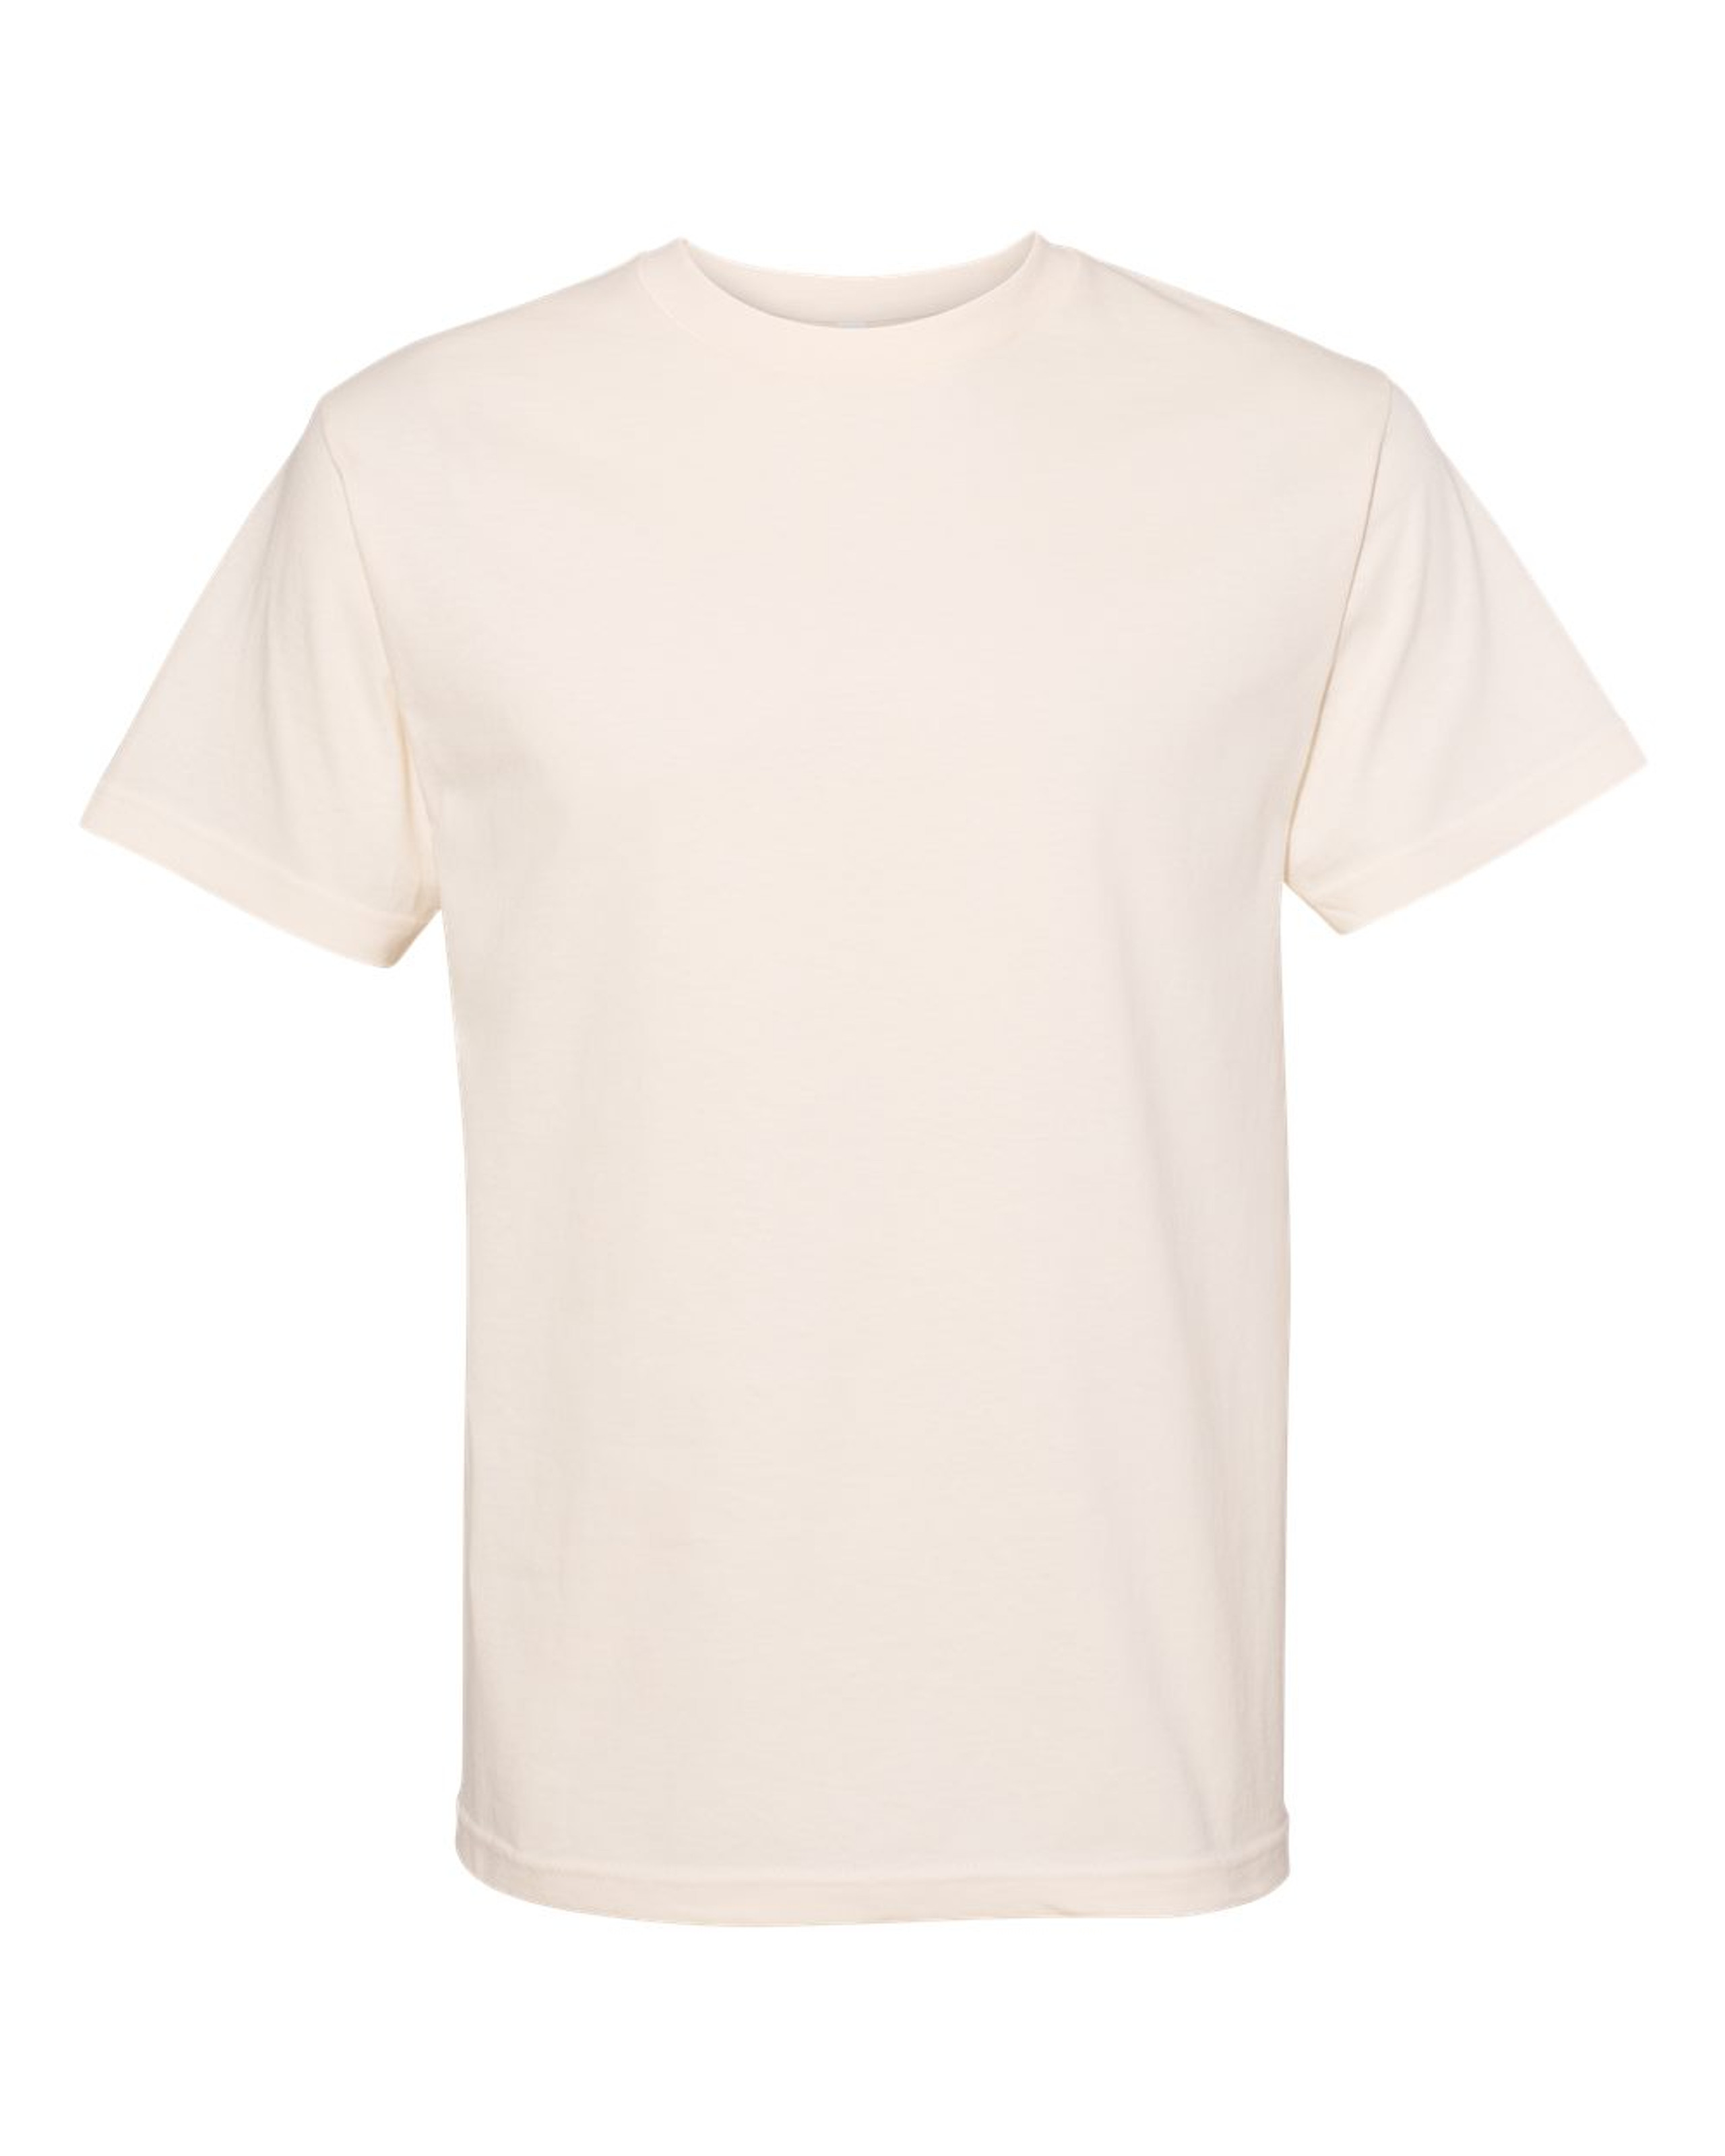 American Apparel 1301 Unisex Heavyweight Cotton T-Shirt - T-shirt.ca